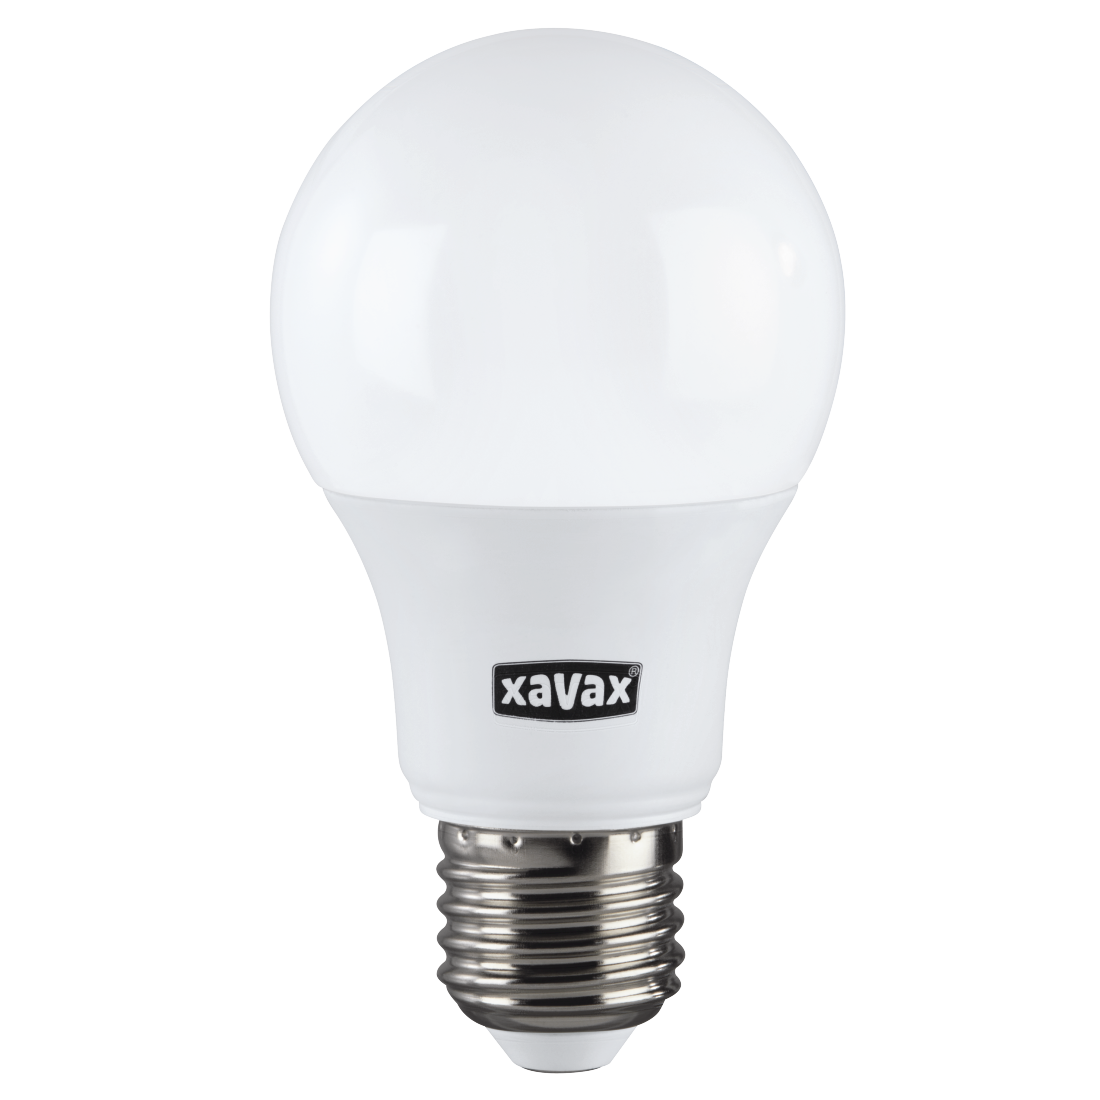 abx Druckfähige Abbildung - Xavax, LED-Lampe, E27, 1055lm ersetzt 75W, Glühlampe, Warmweiß